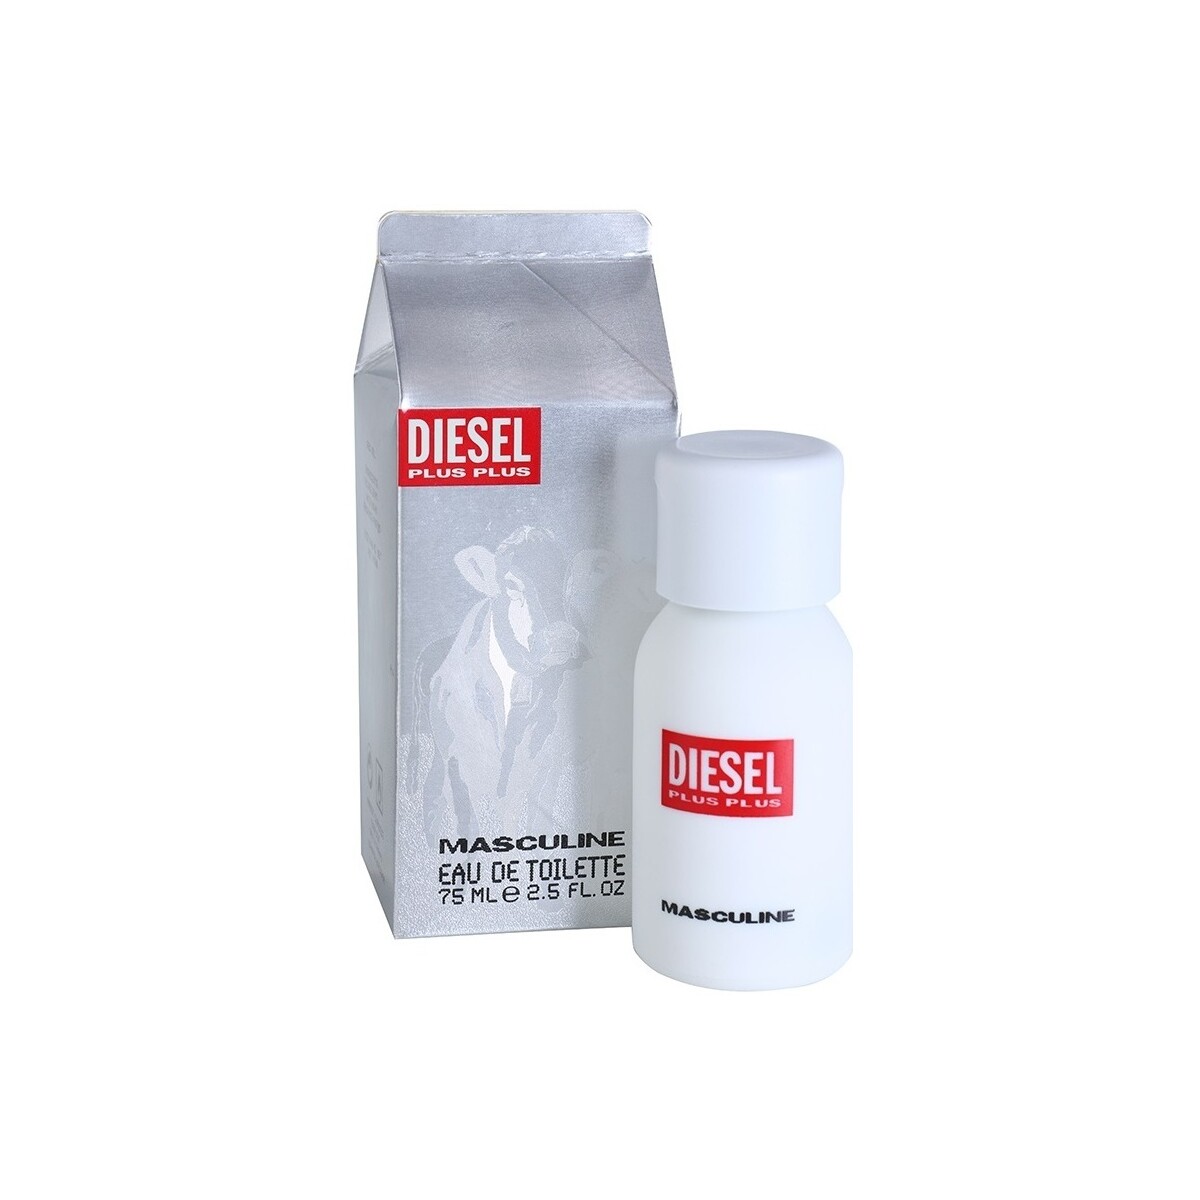 beleza Homem Colónia Diesel Plus Plus - colônia - 75ml - vaporizador Plus Plus - cologne - 75ml - spray